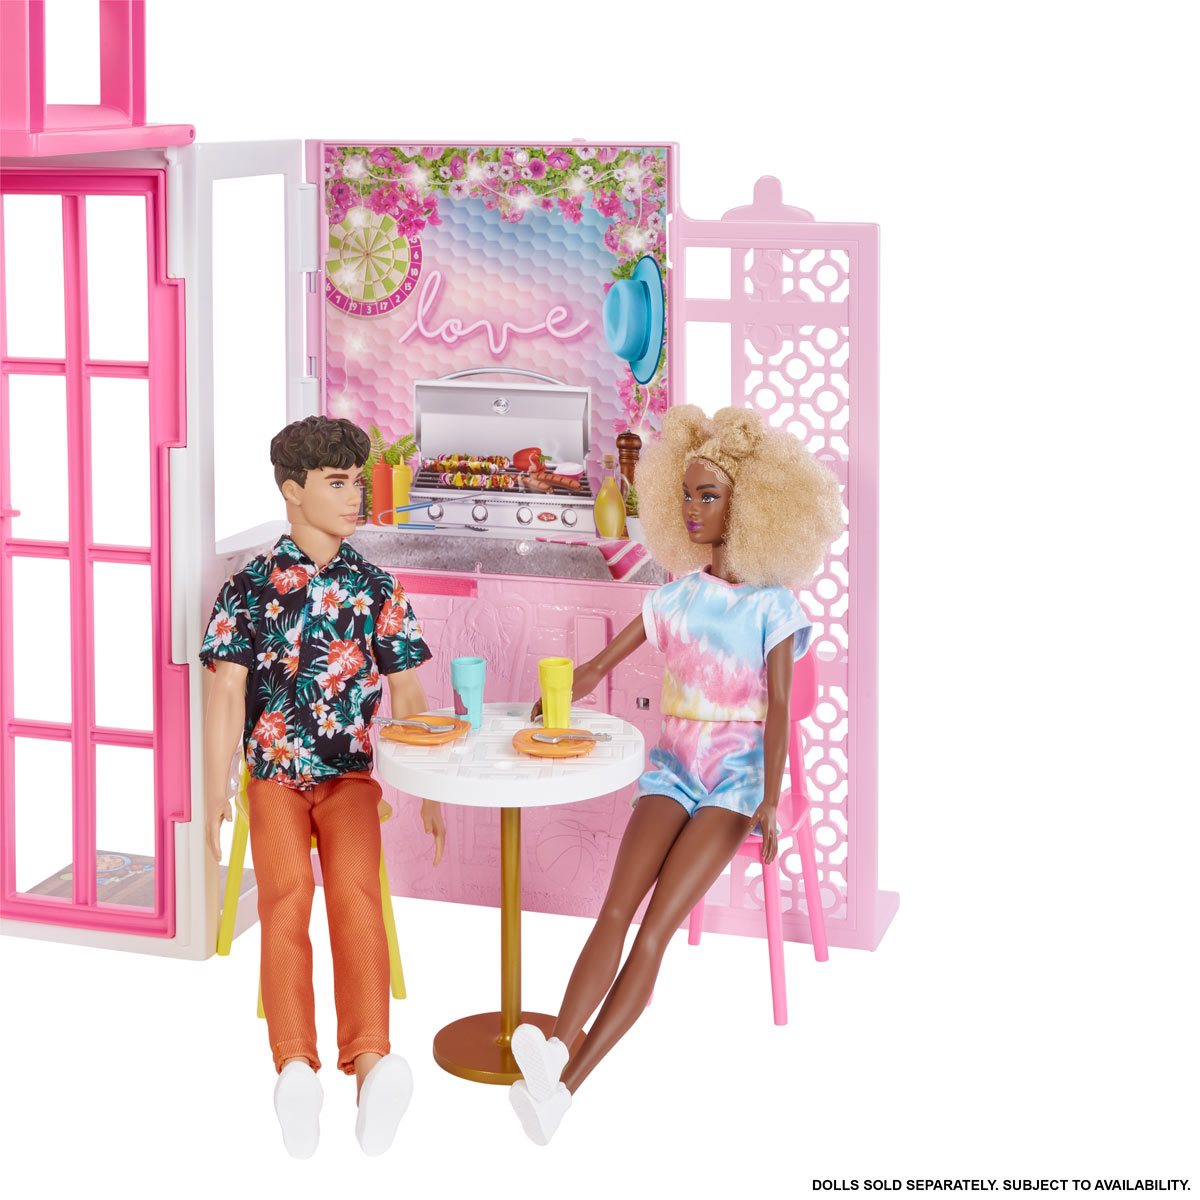 Best Buy: Barbie Dollhouse Styles May Vary FXG54